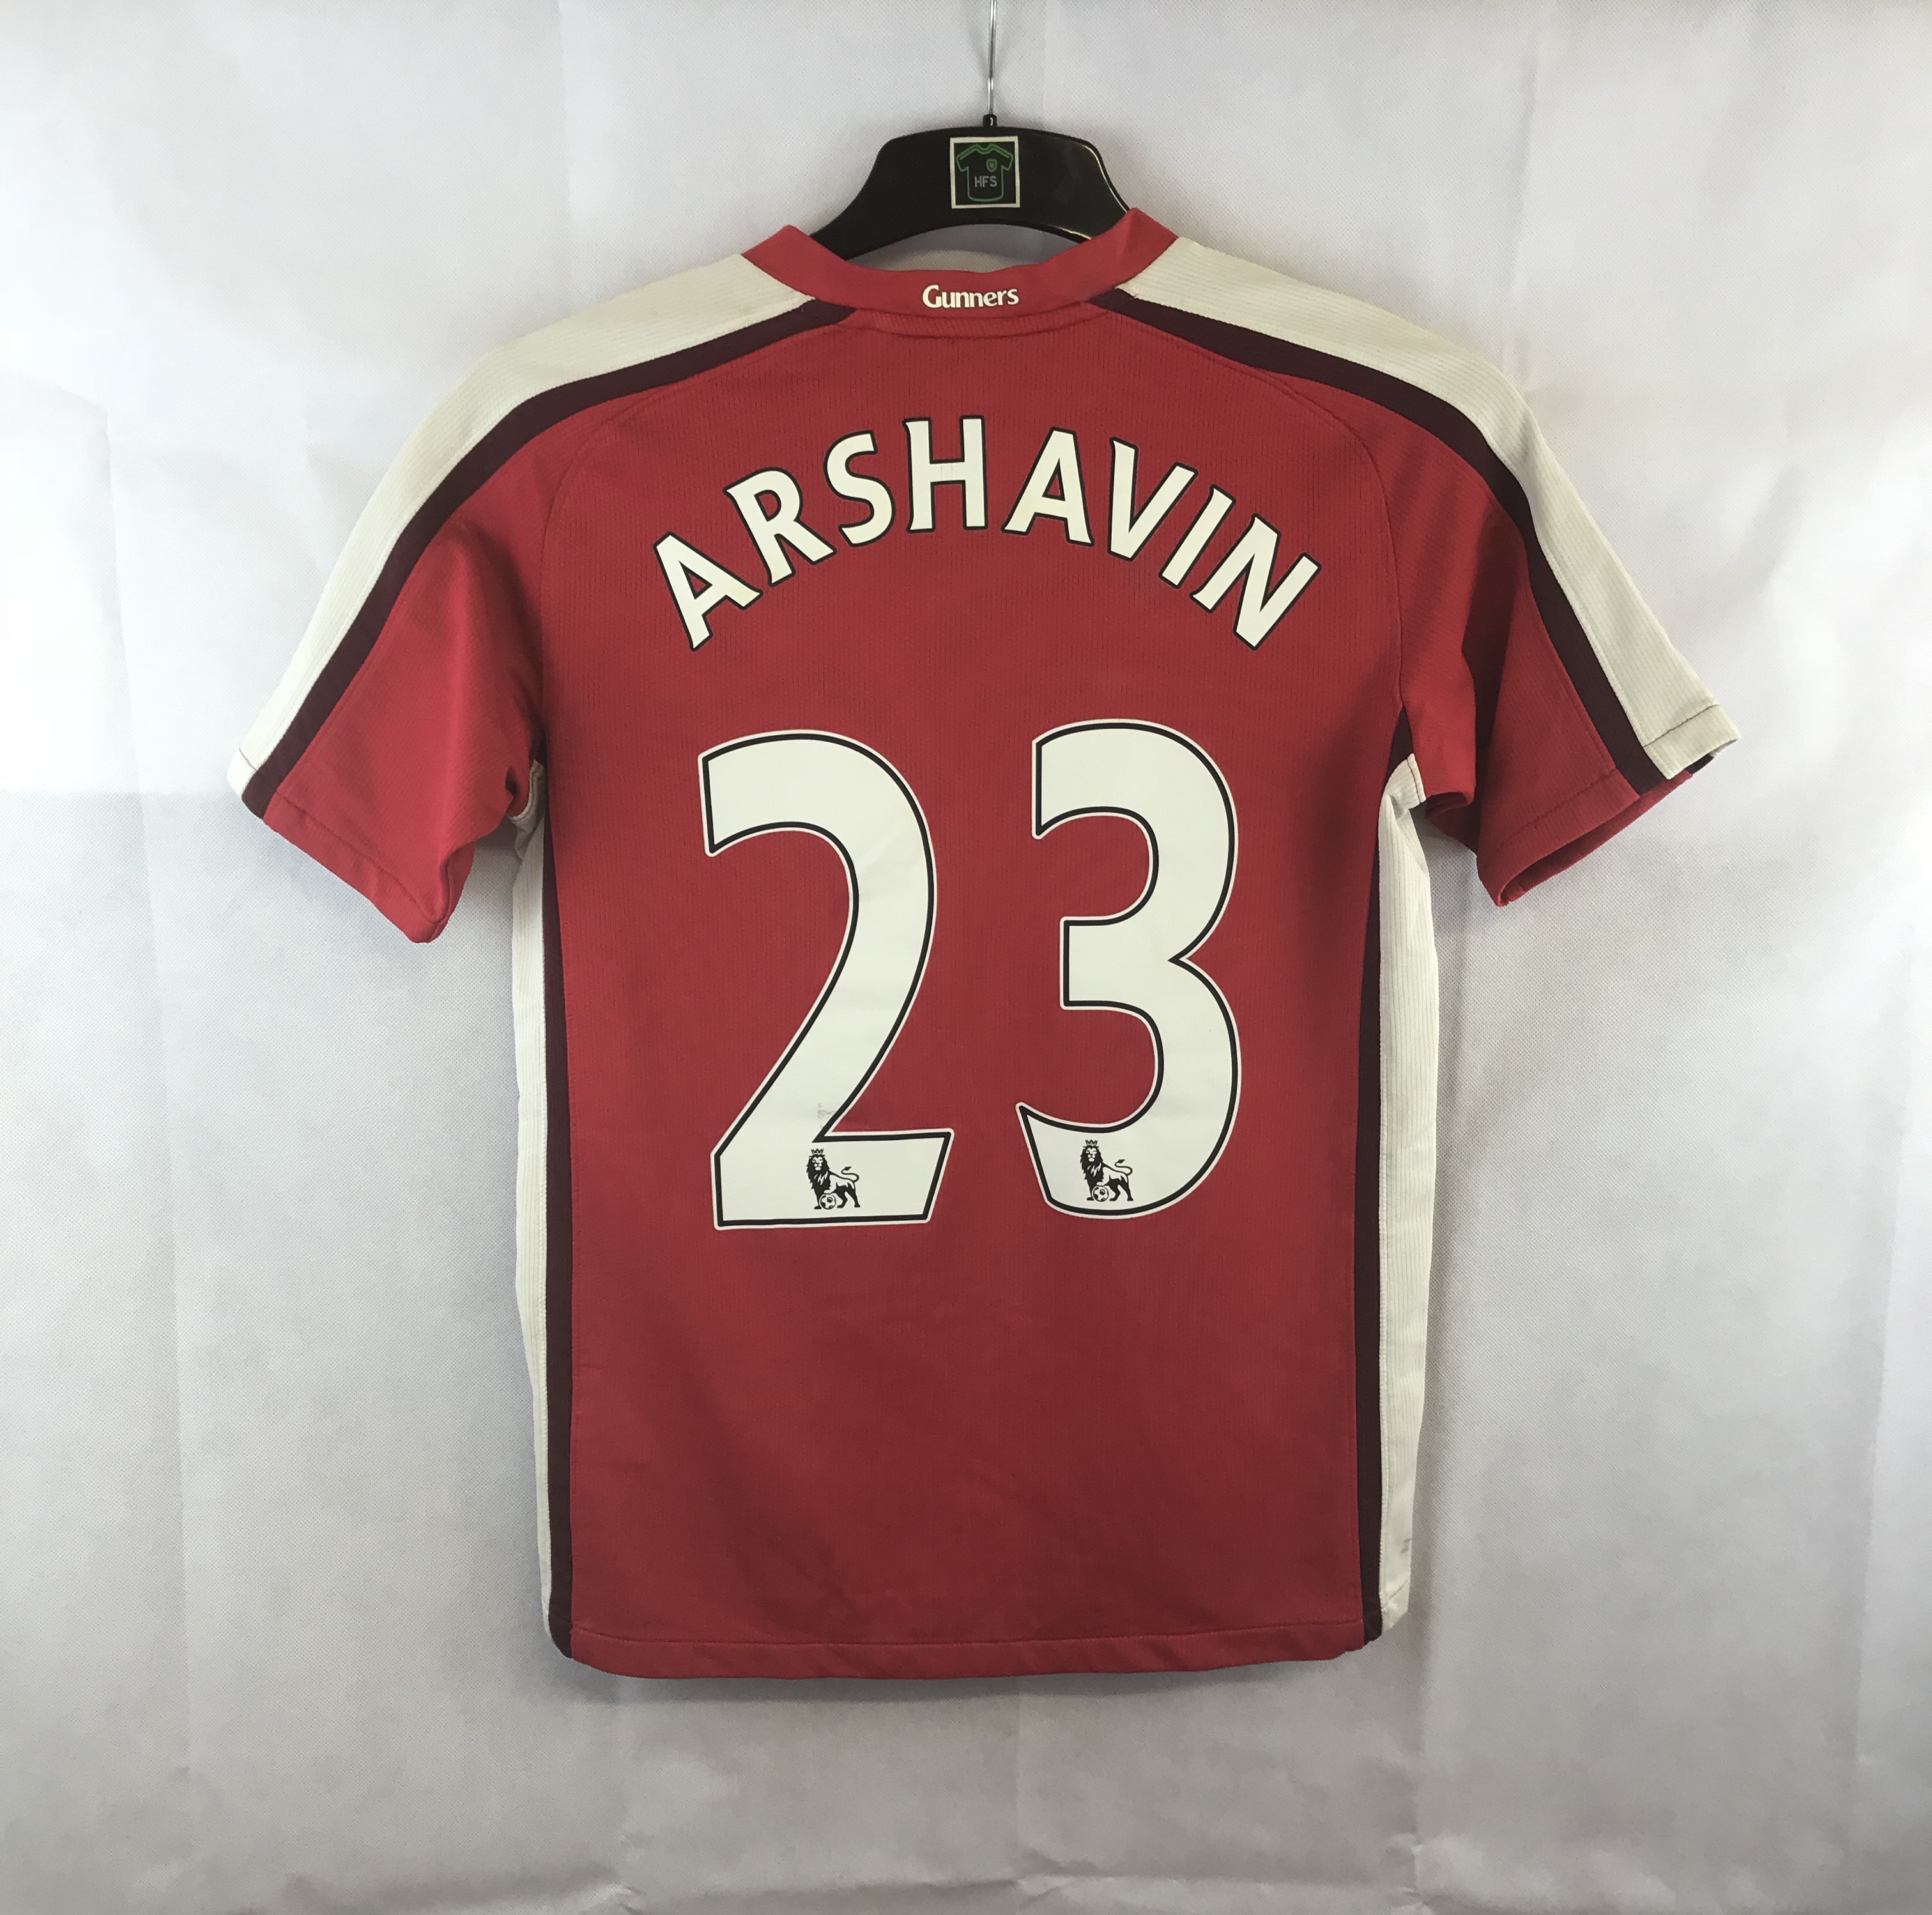 Arsenal Arshavin 23 Home Football Shirt 